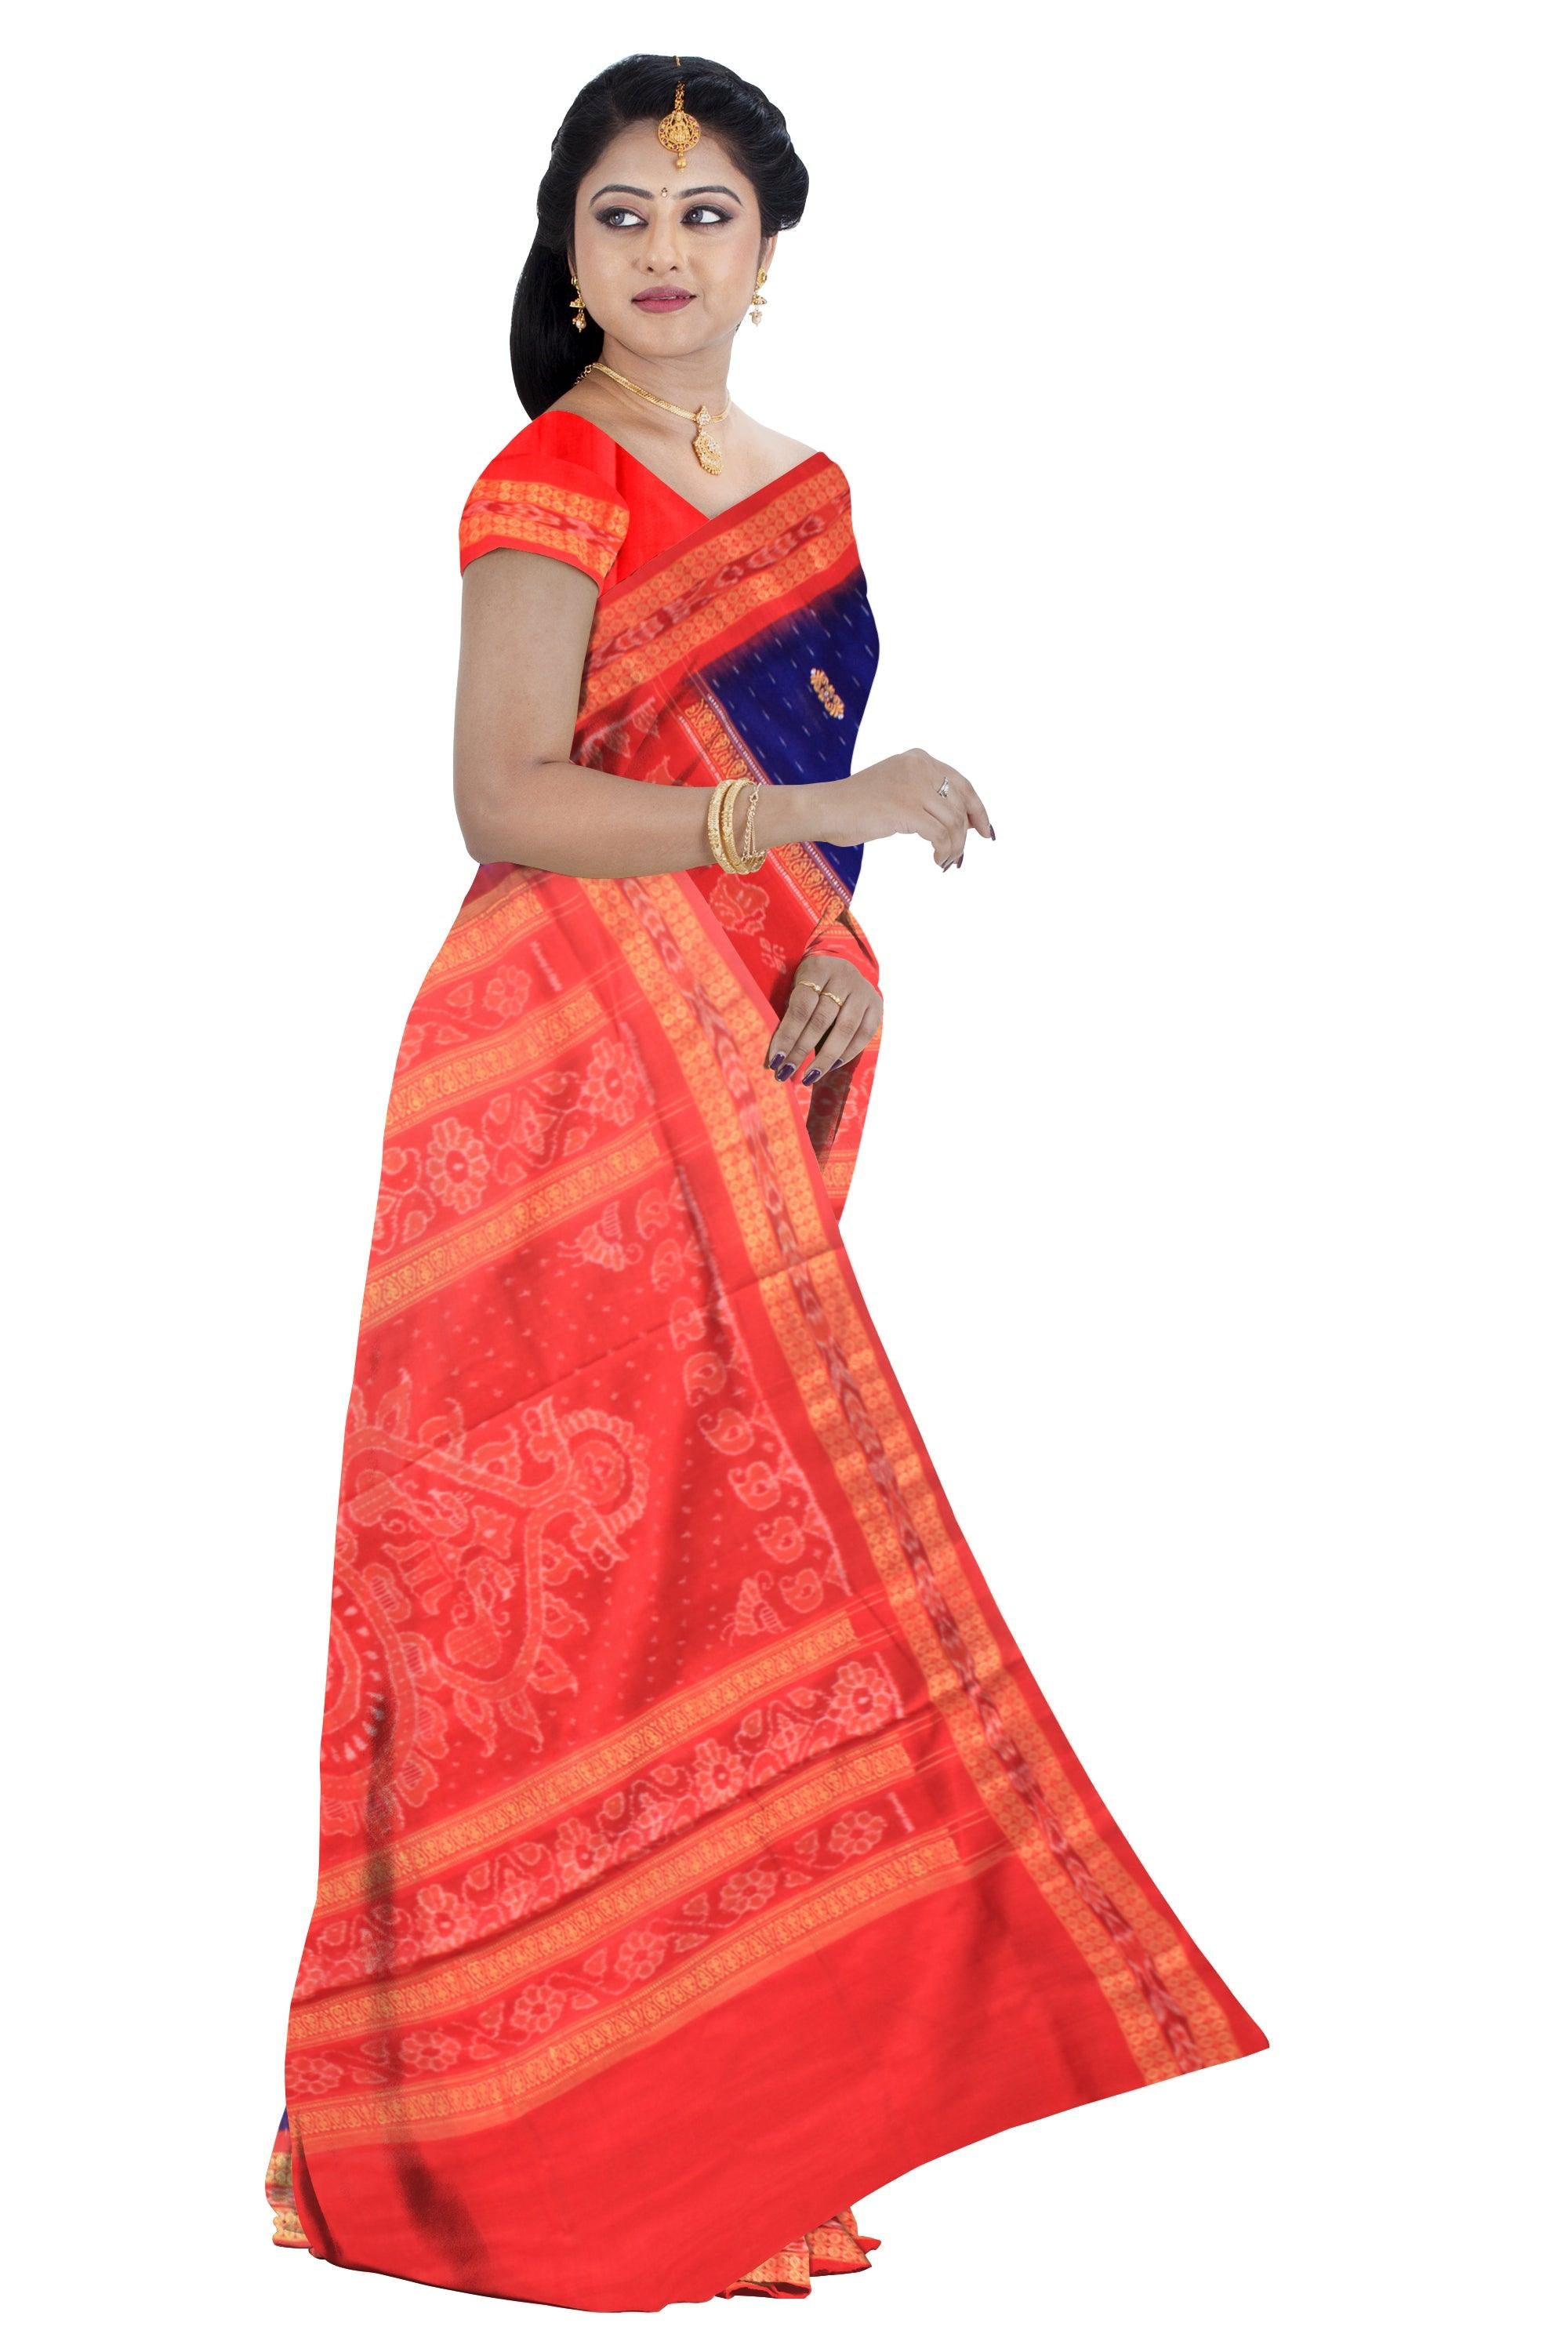 Sambalpuri cotton saree in deep Blue and Red color with blouse piece - Koshali Arts & Crafts Enterprise